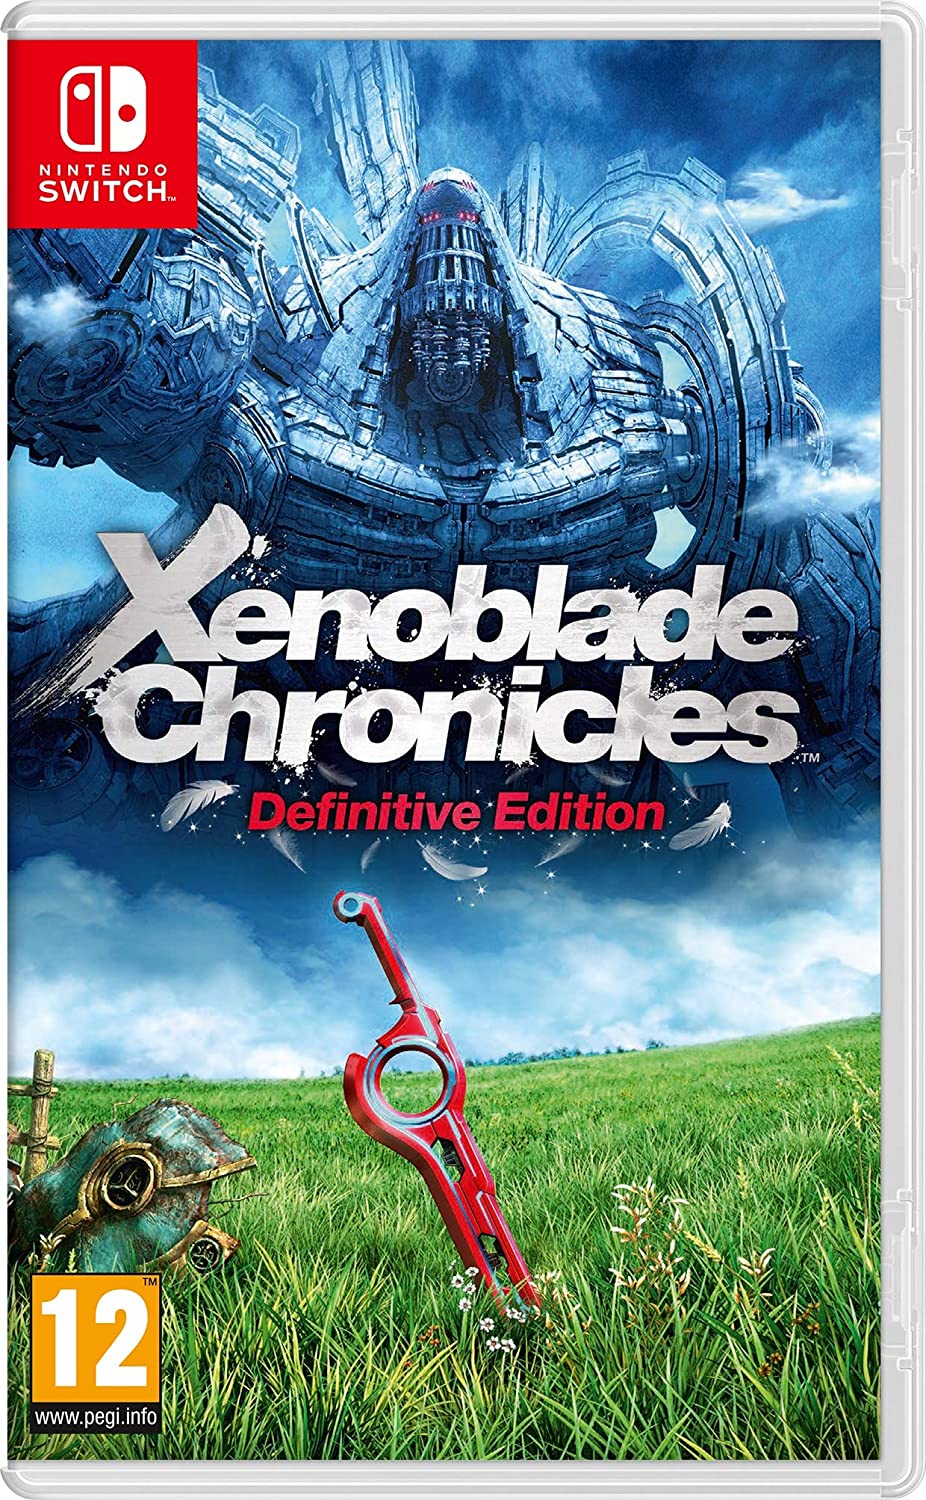 Xenoblade Chronicles: Definitive Edition Digital Download Key (Nintendo Switch)